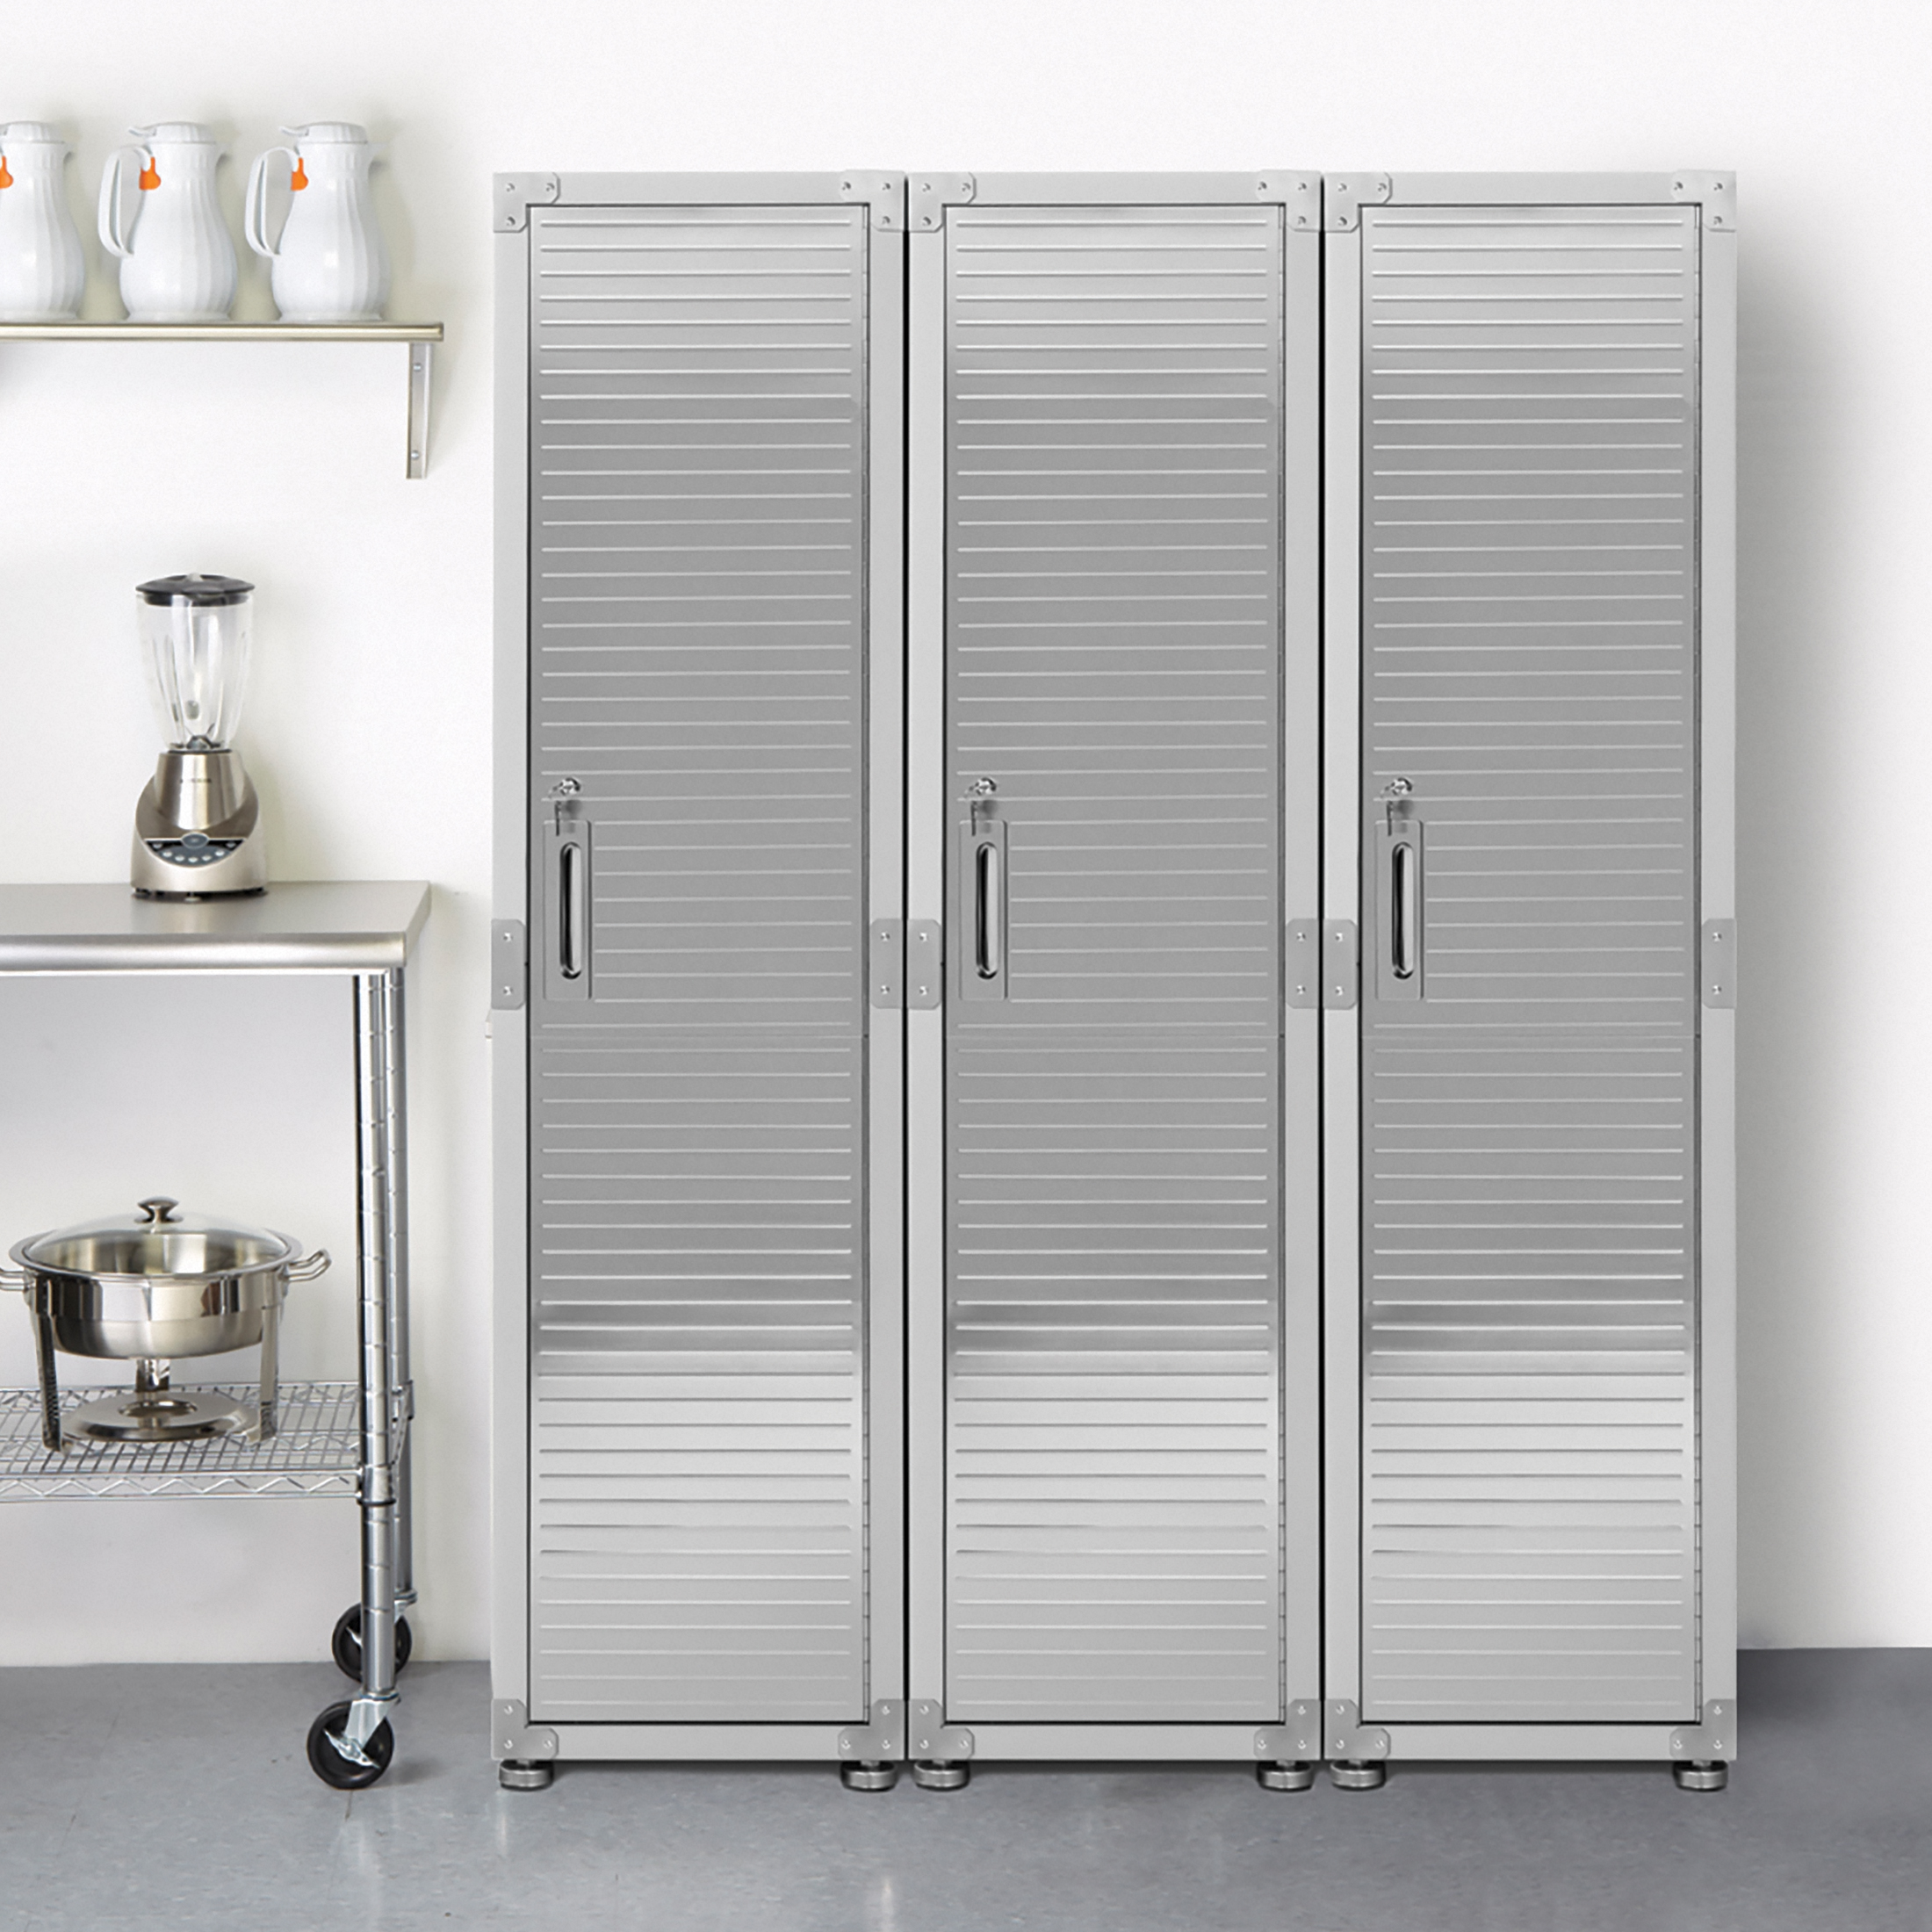 Seville Classics UltraHD Locker Storage Cabinet, 18" W x 24" D x 72" H, Granite Gray - image 4 of 6